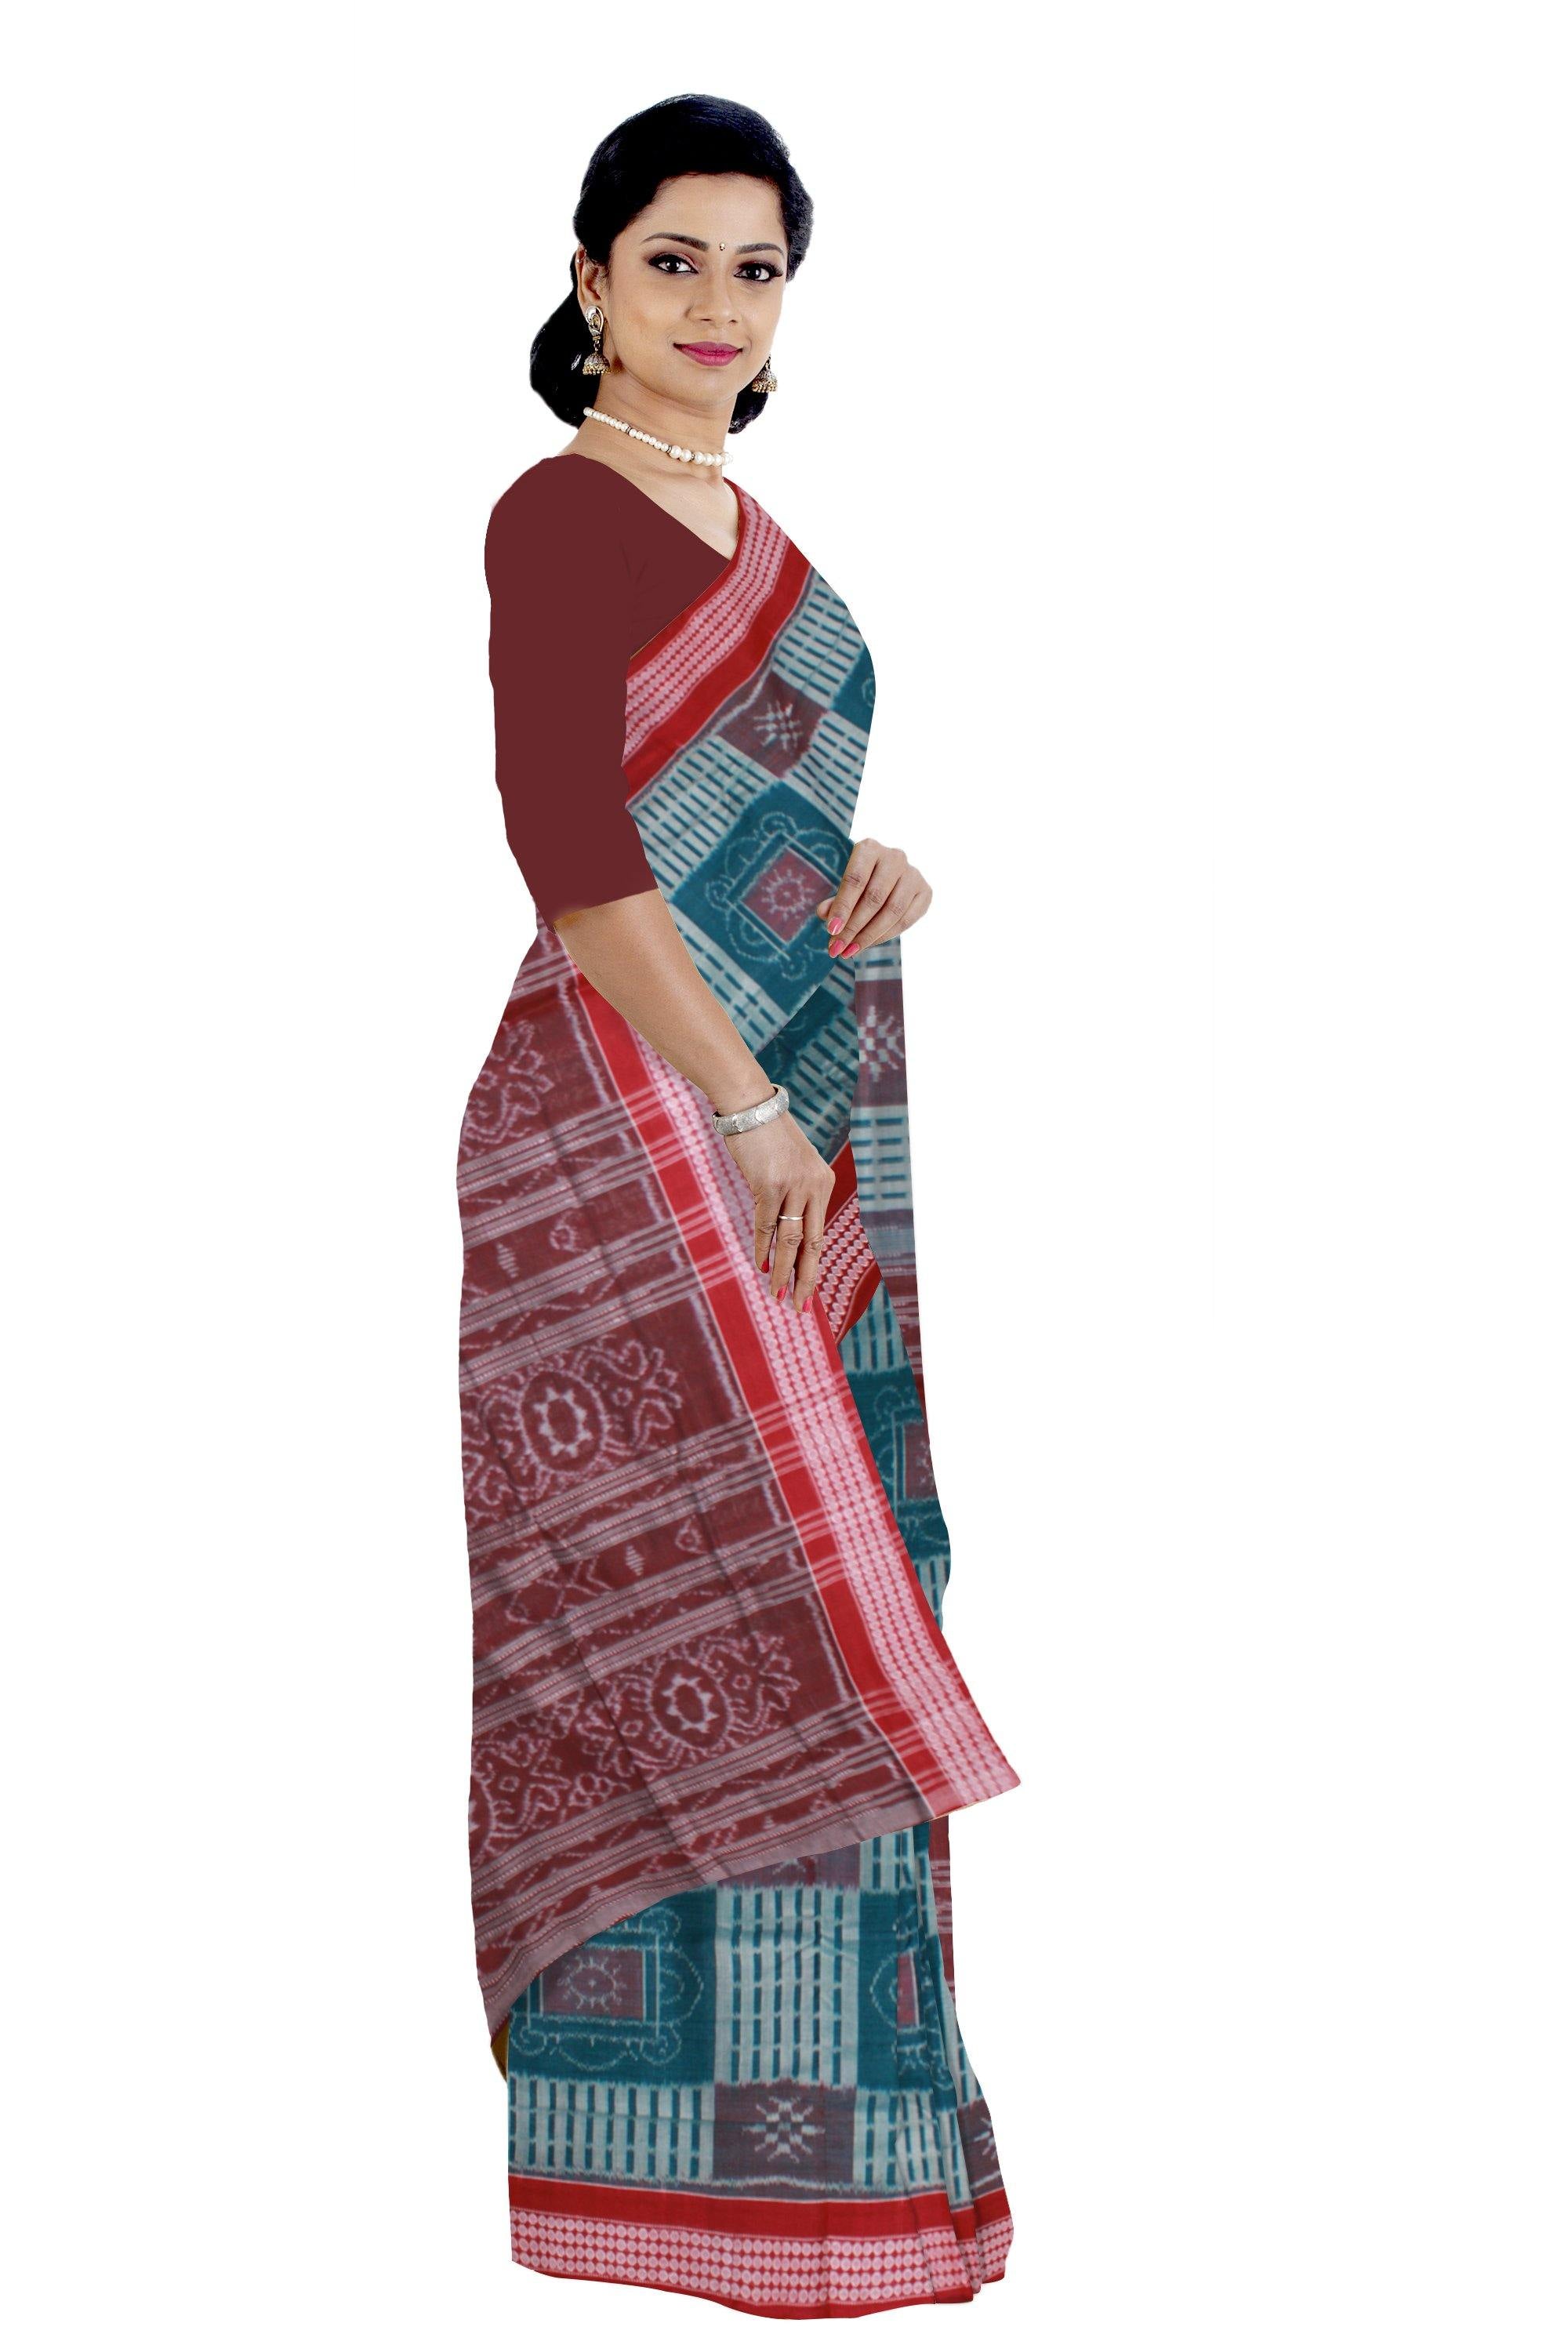 Flower pattern Green Cotton Saree without a blouse piece - Koshali Arts & Crafts Enterprise